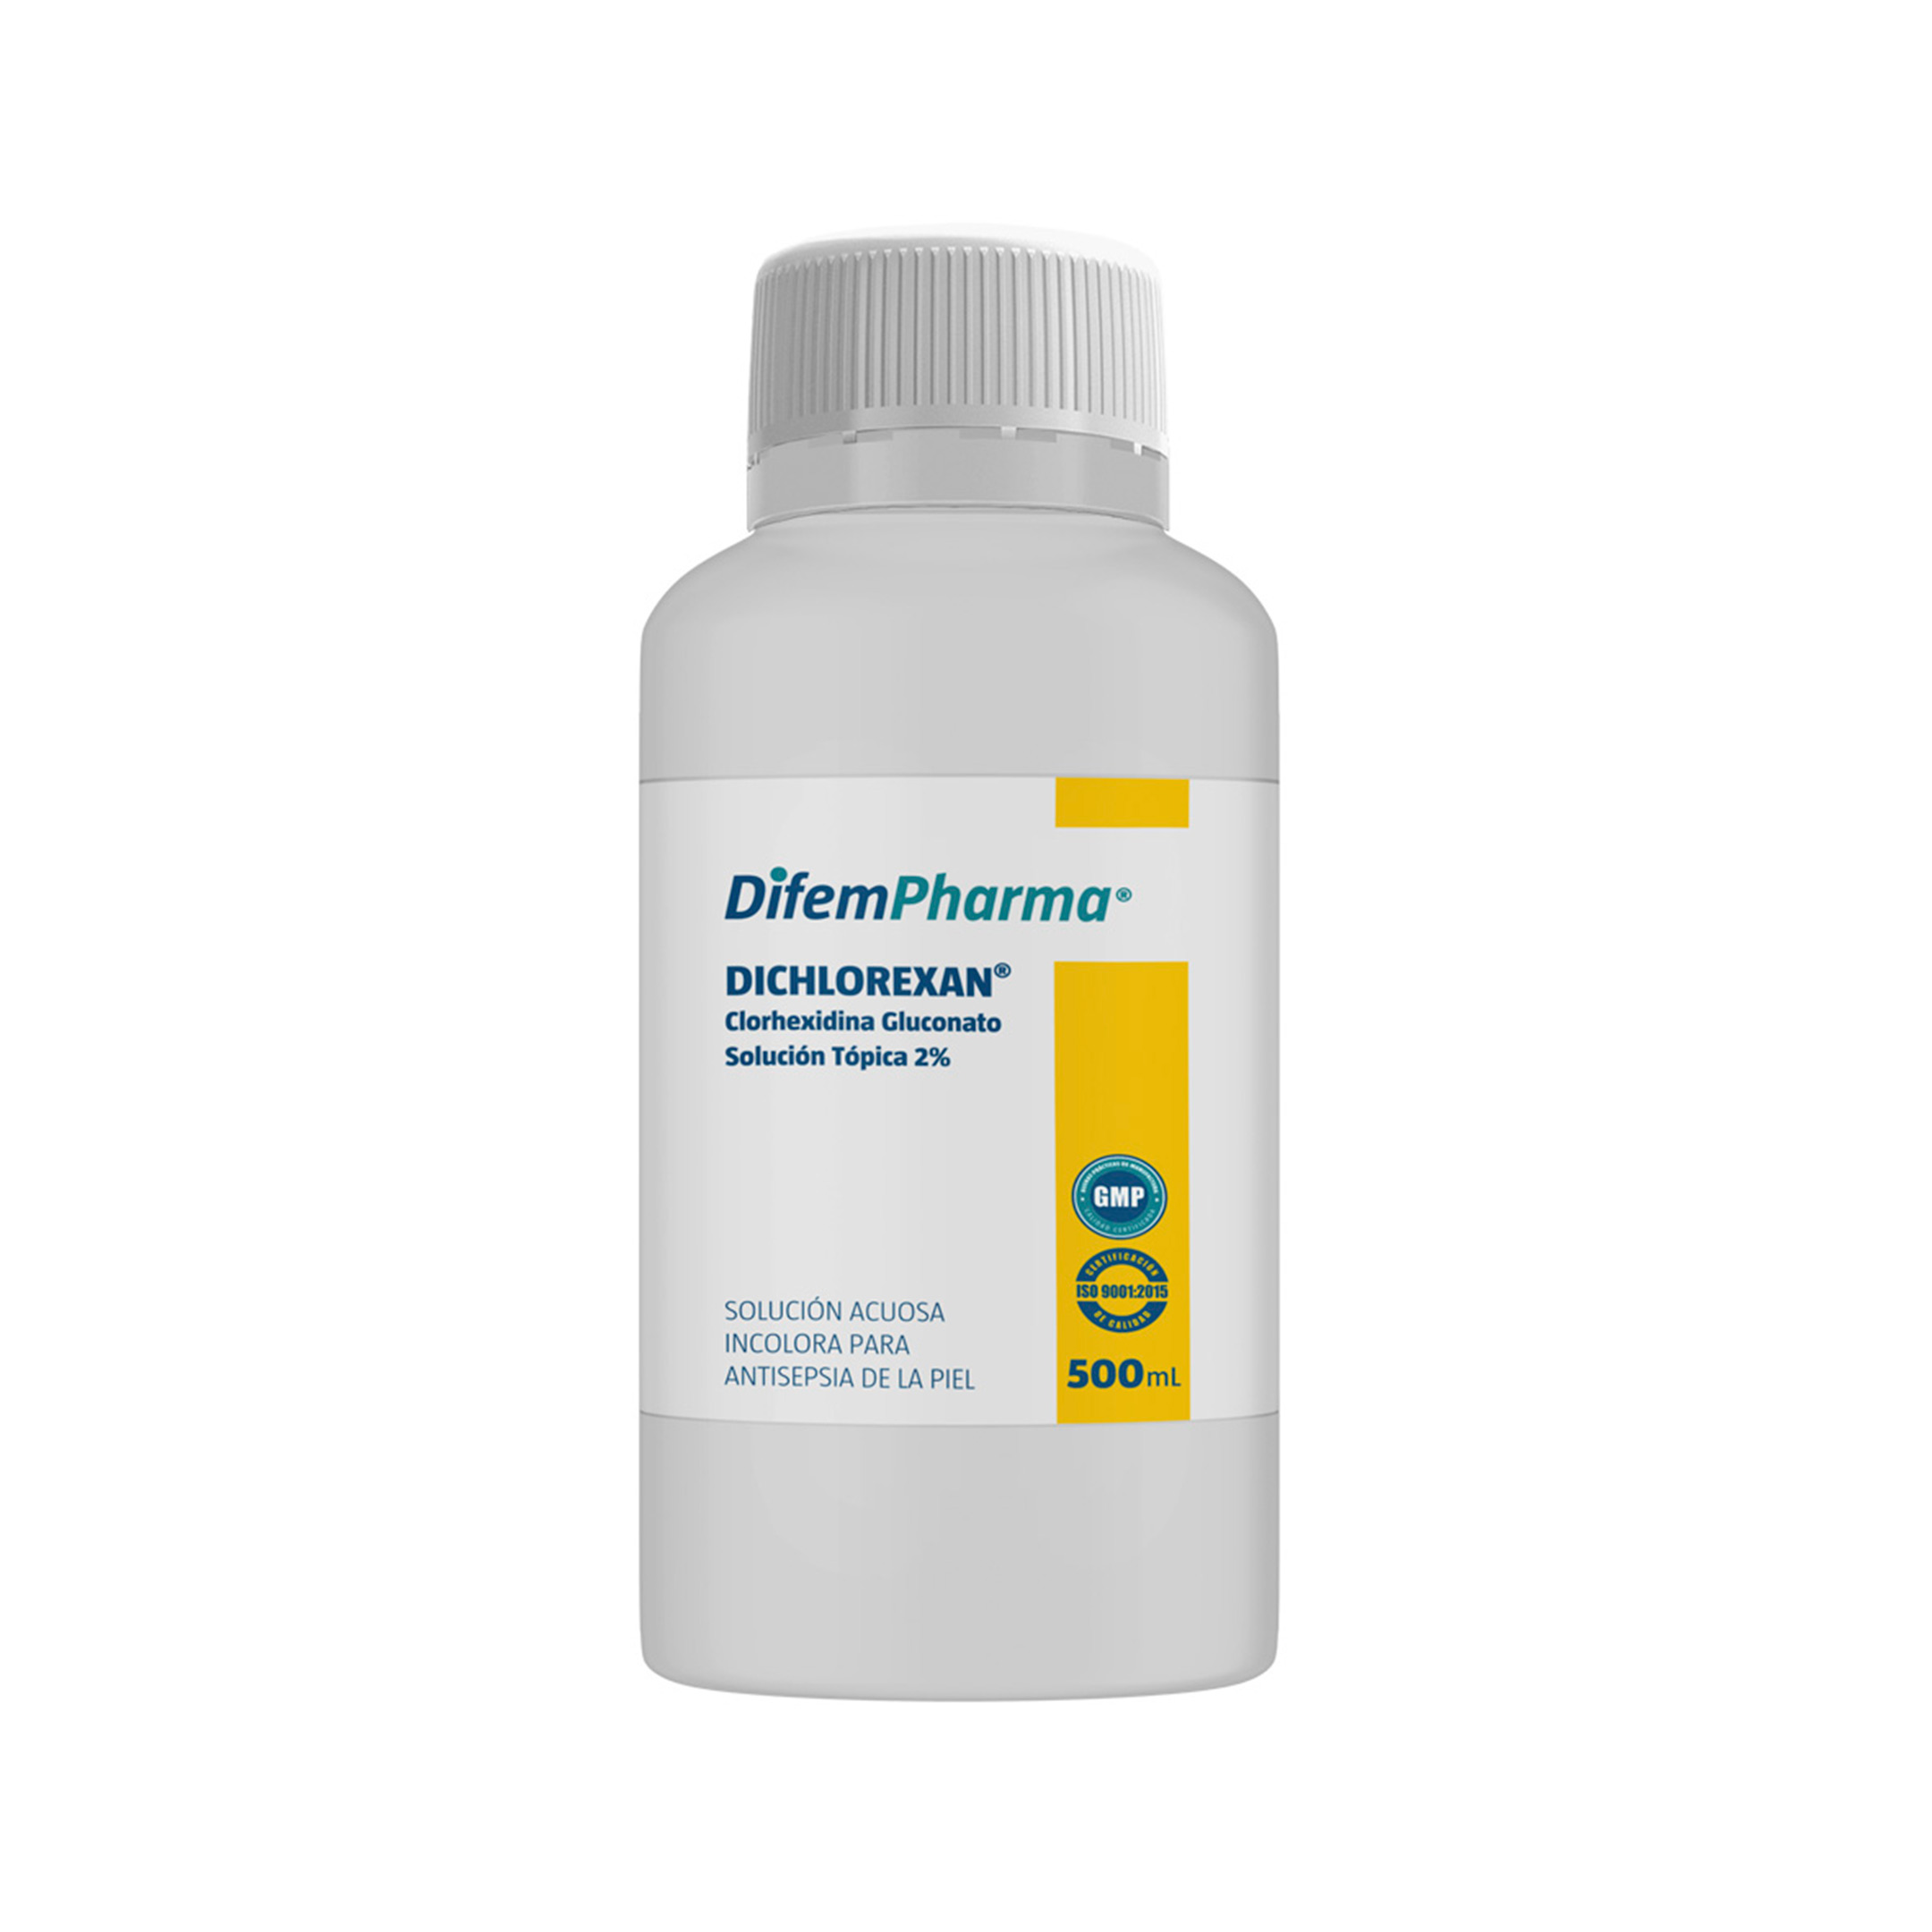 Dichlorexan Solución Incolora 2% es un potente antiséptico de alta acción antimicrobiana. Formulado en base acuosa. Producto Hipoalergénico.